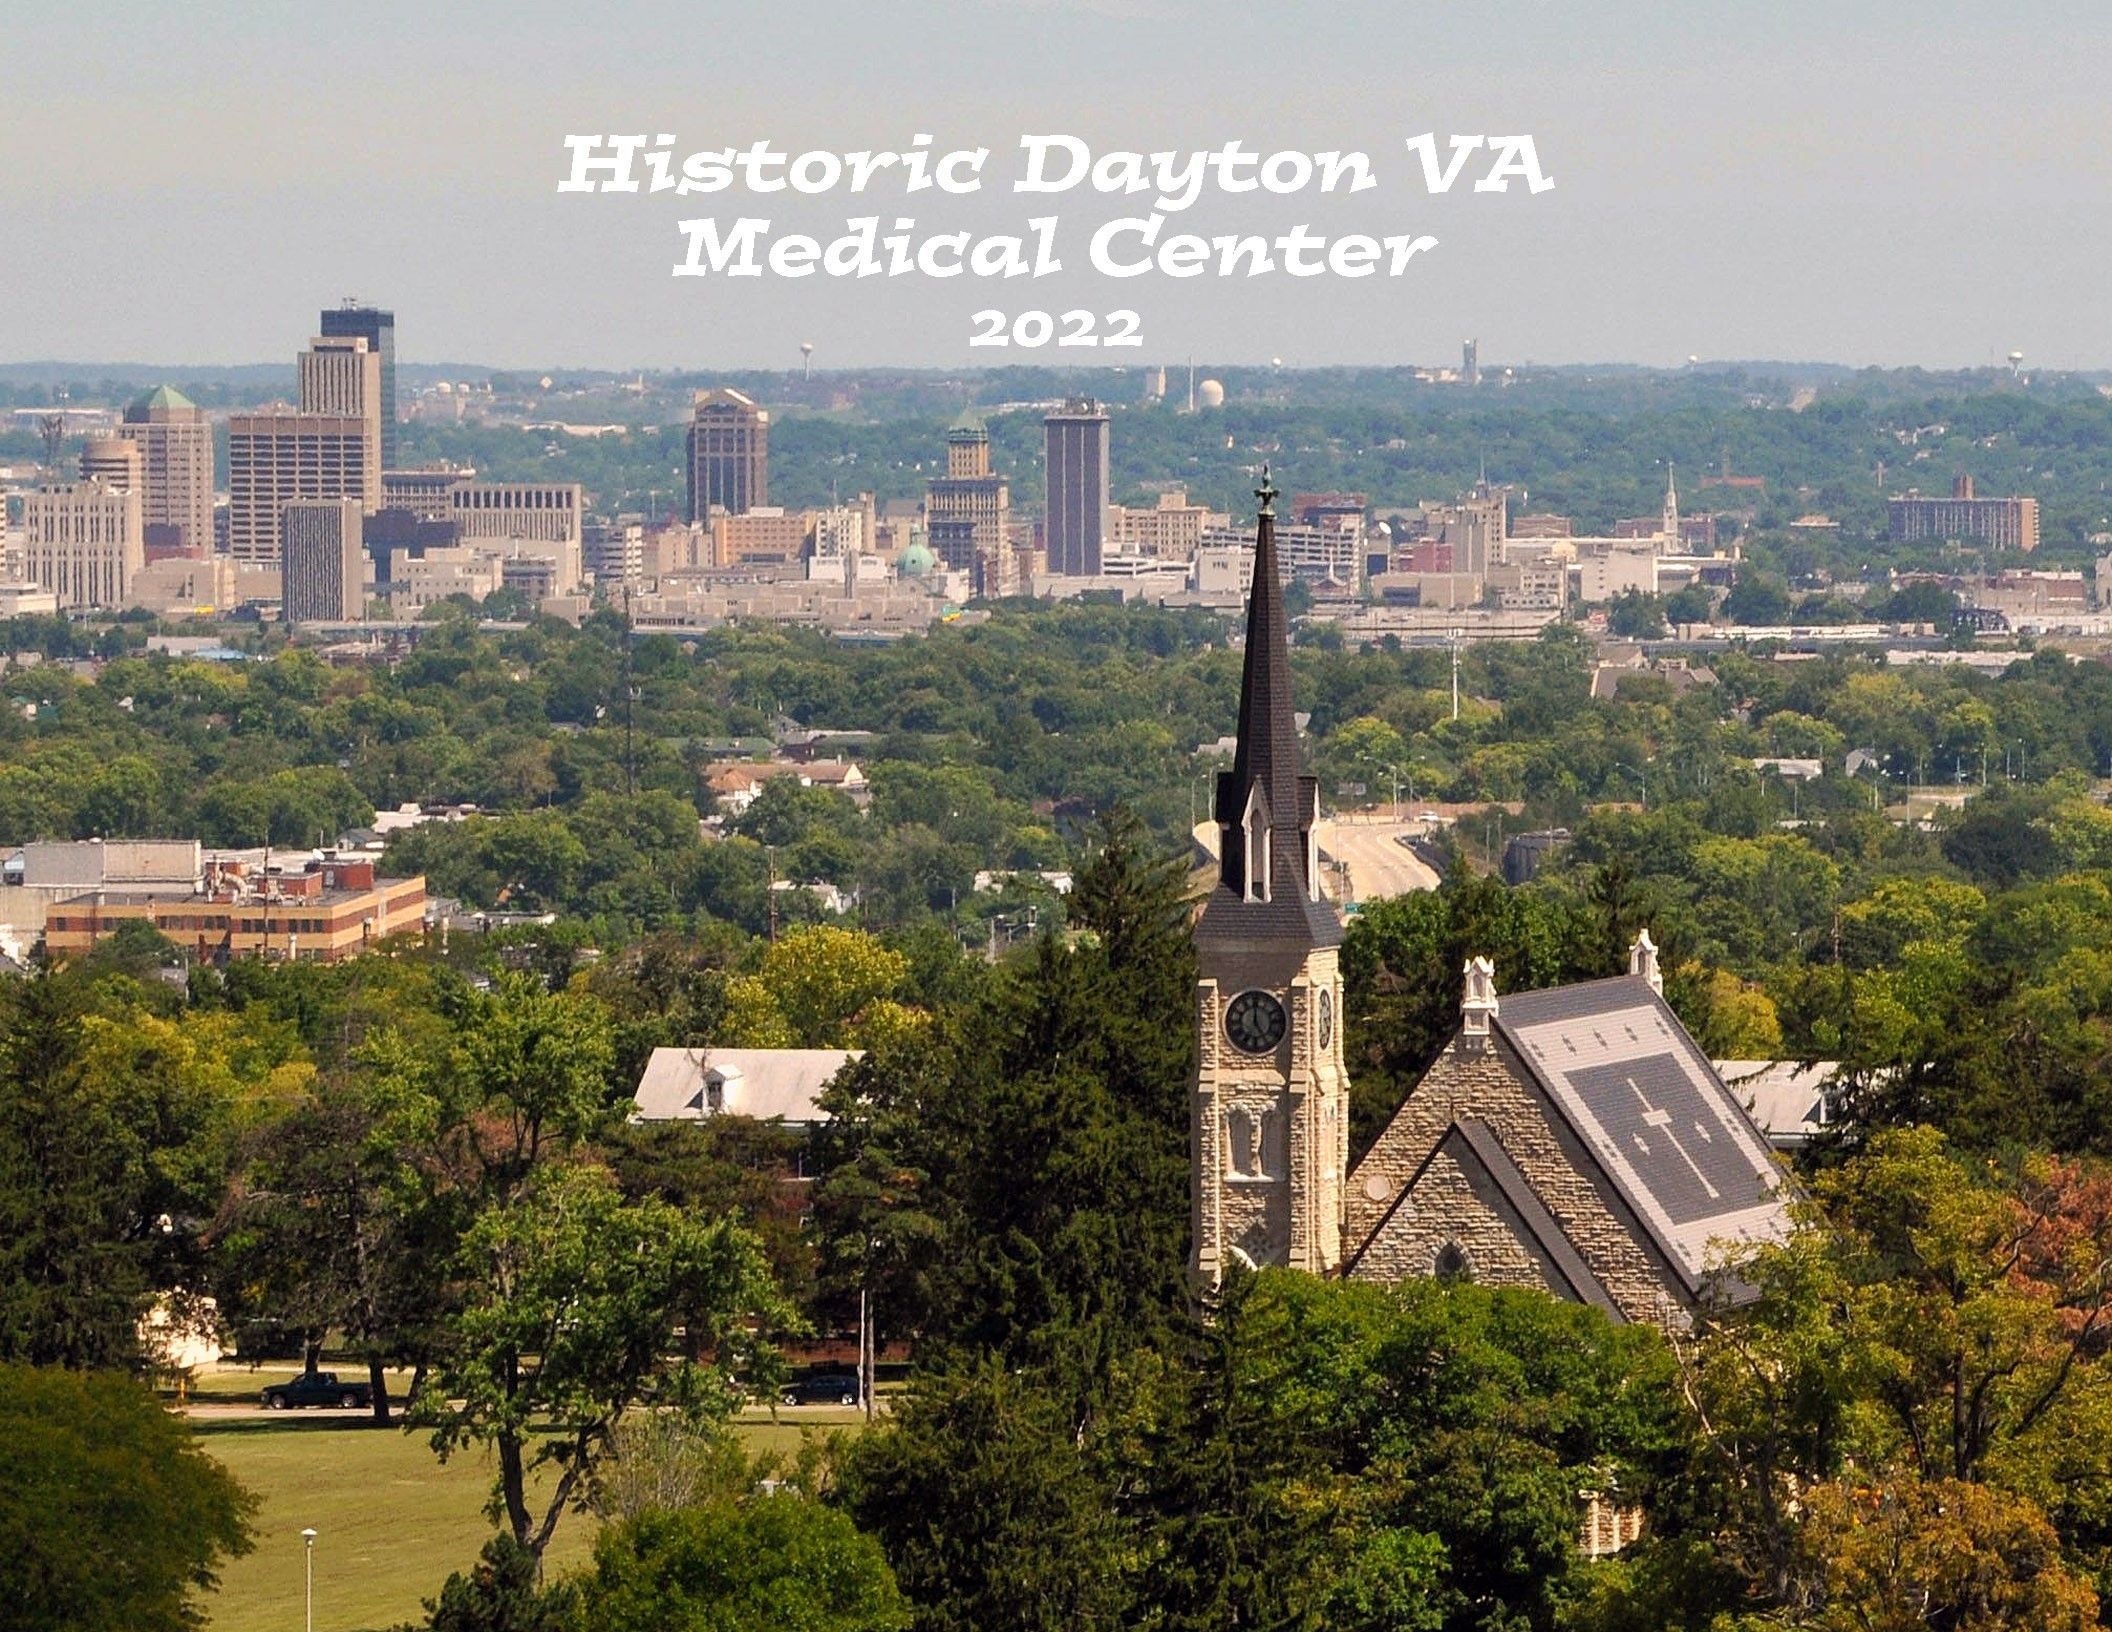 Historic Dayton VA Calendars are now available.